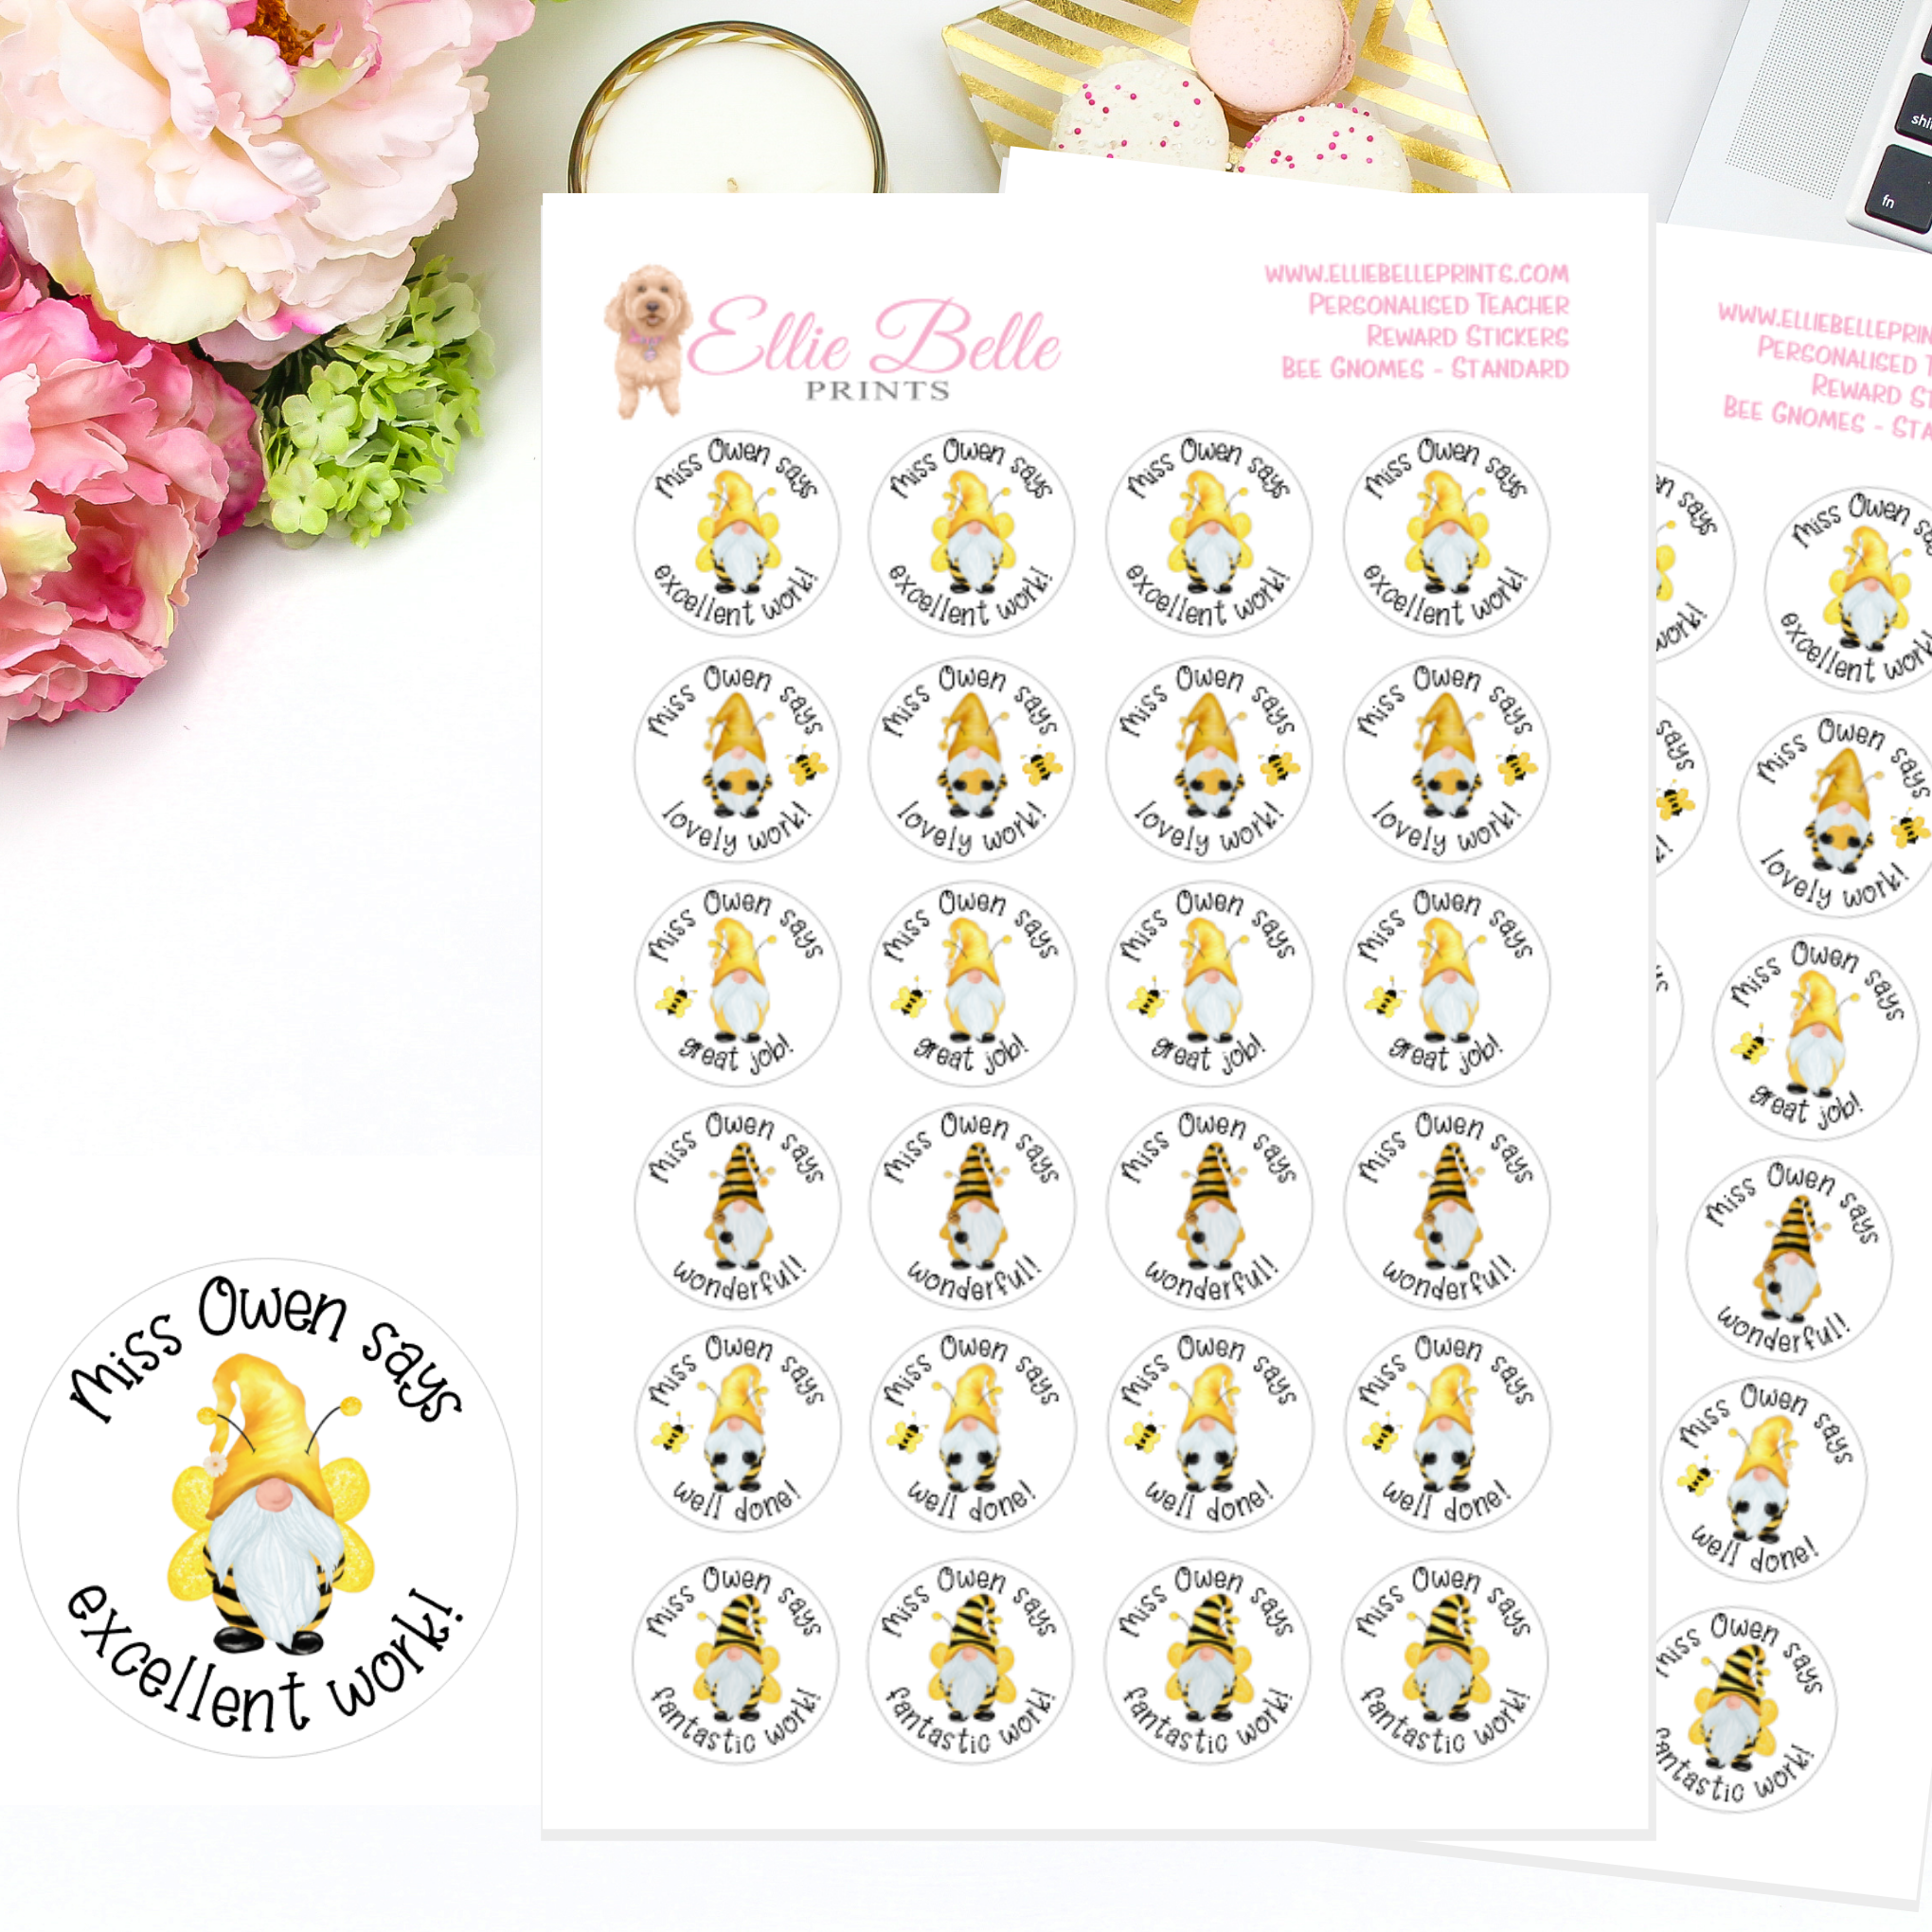 Bee Gnomes (Standard) - Personalised Teacher Reward Stickers